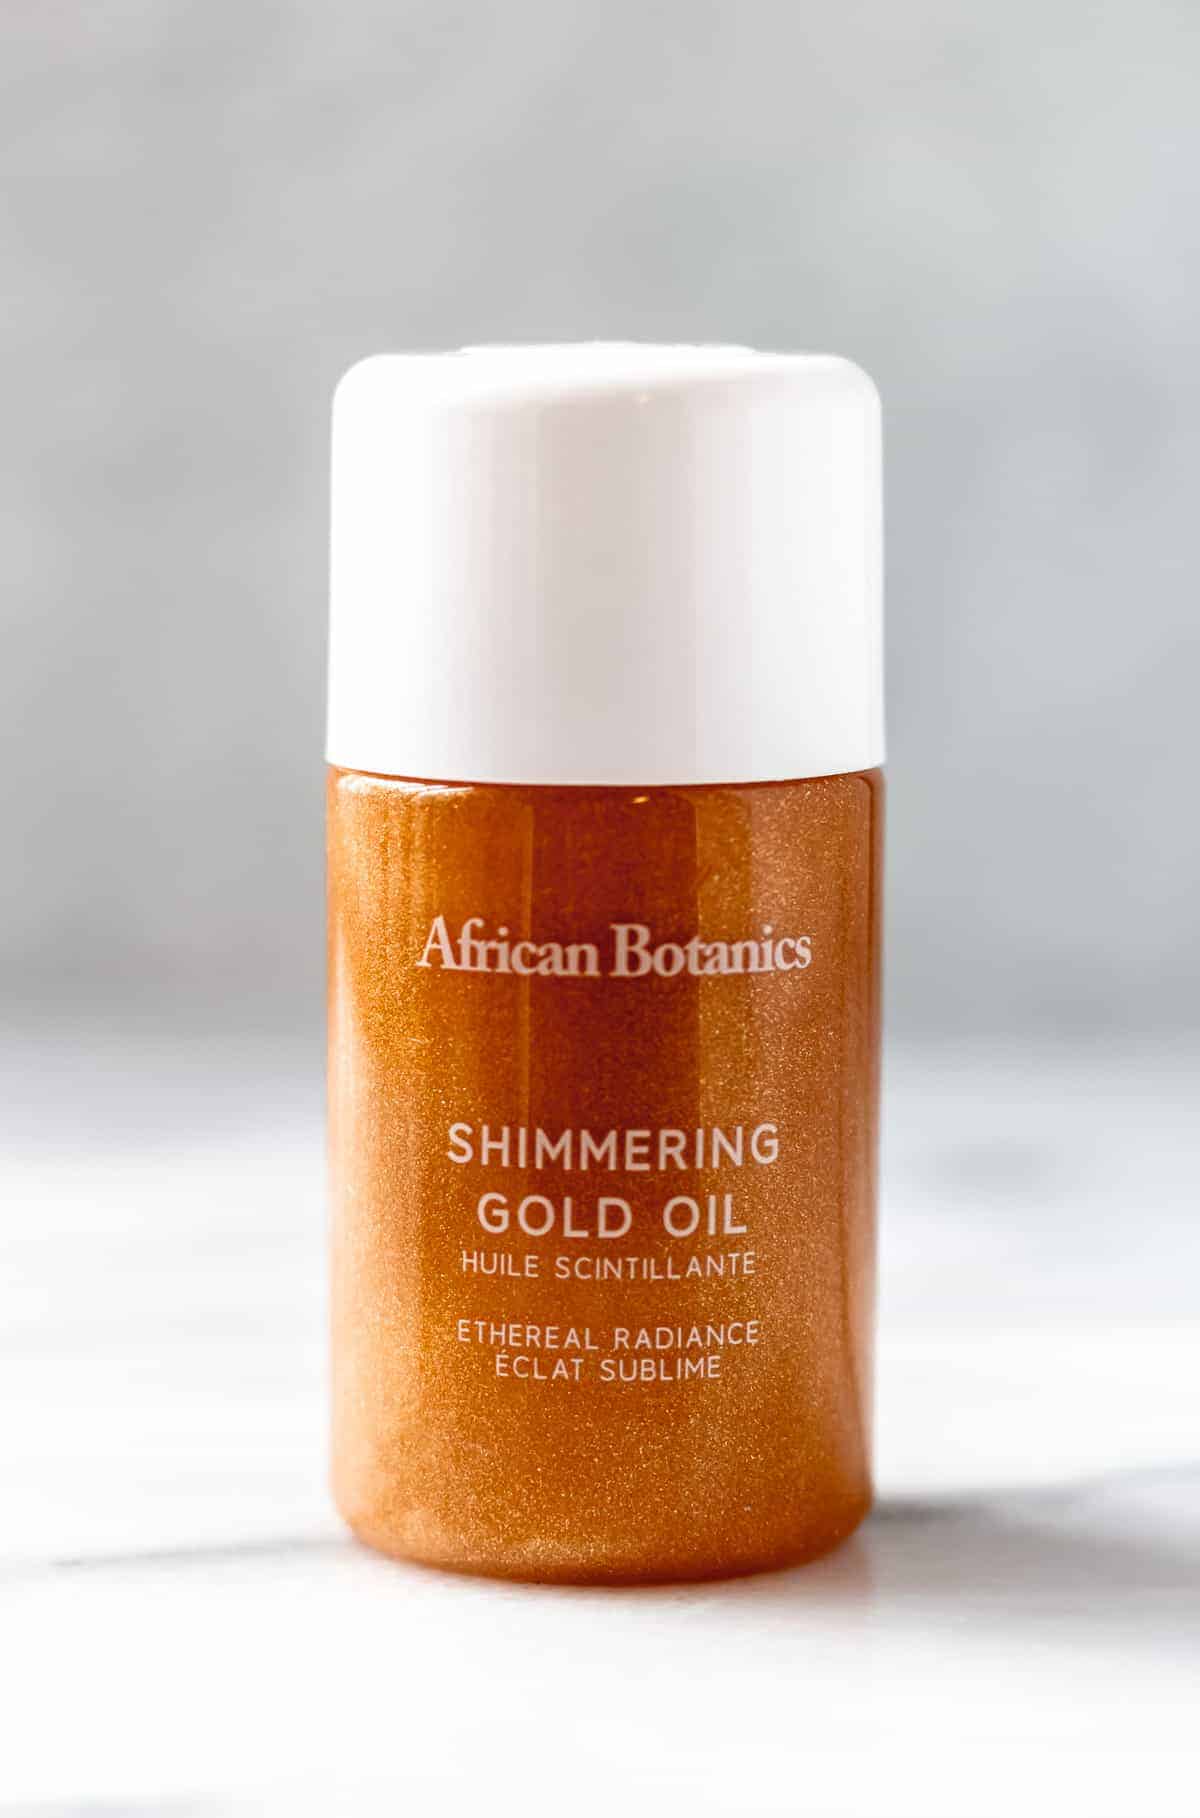 African Botanics Gold Shimmer Oil on a gray background